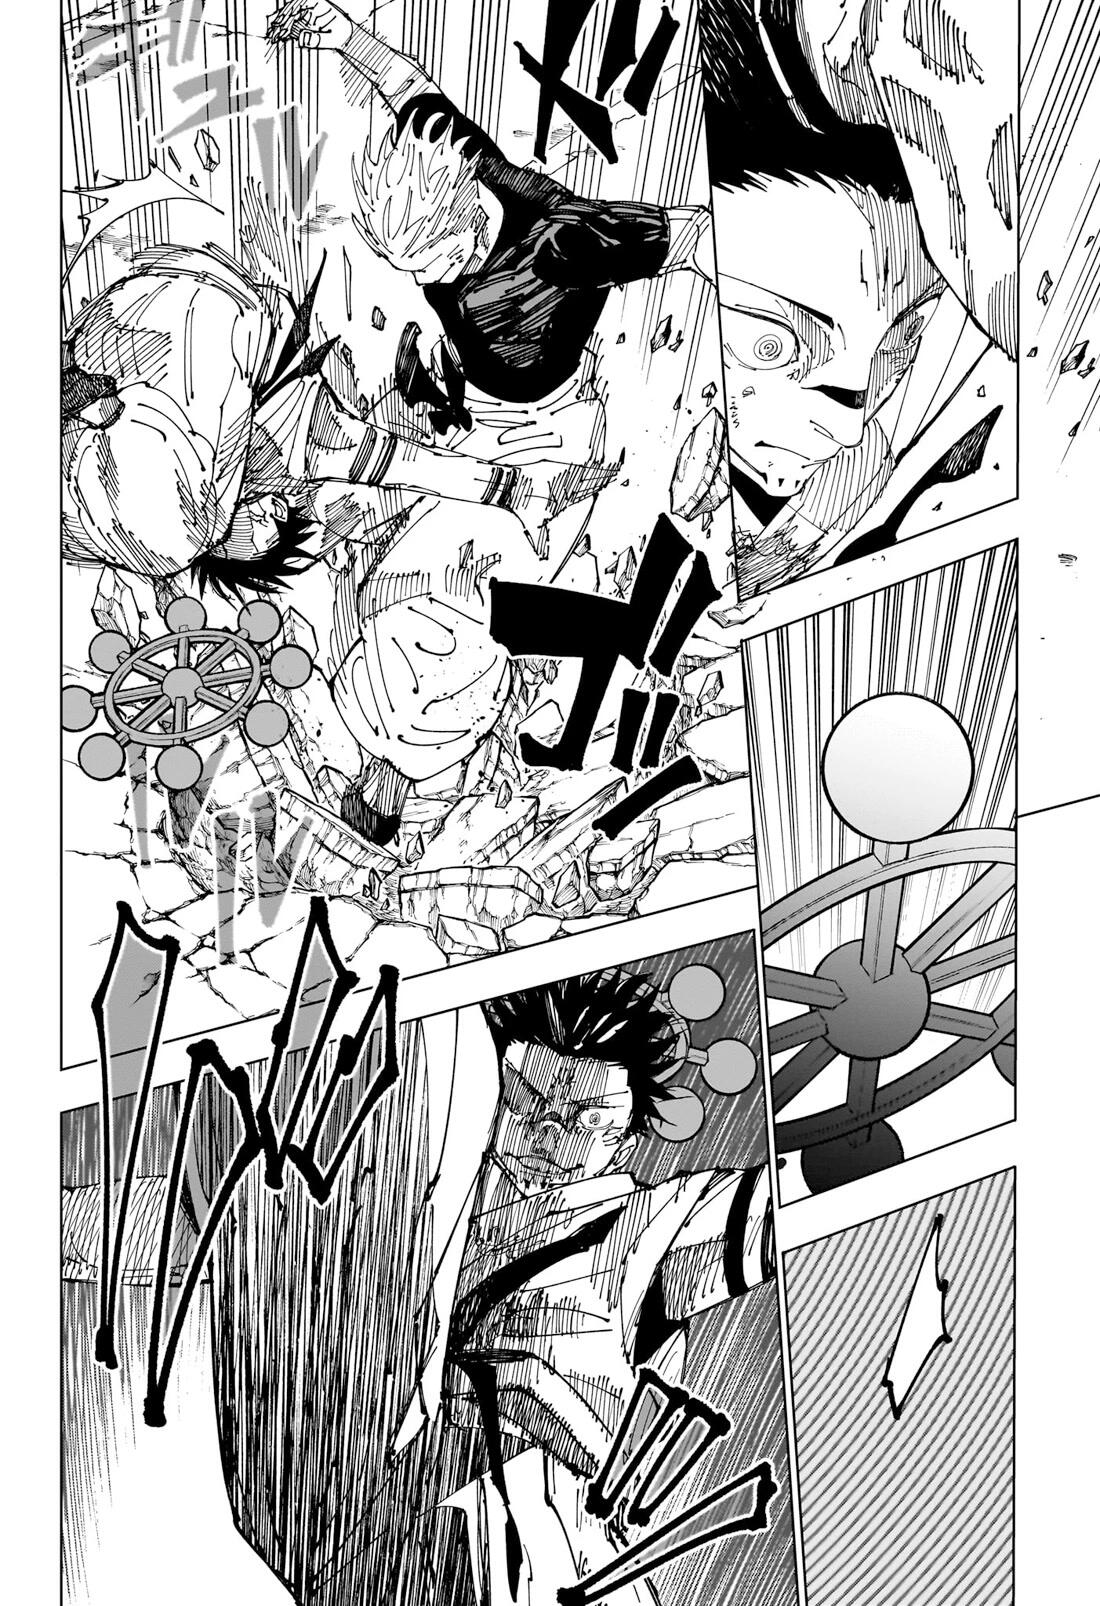 Jujutsu Kaisen Chapter 231: The Decisive Battle In The Uninhabited, Demon-Infested Shinjuku ⑨ page 8 - Mangakakalot